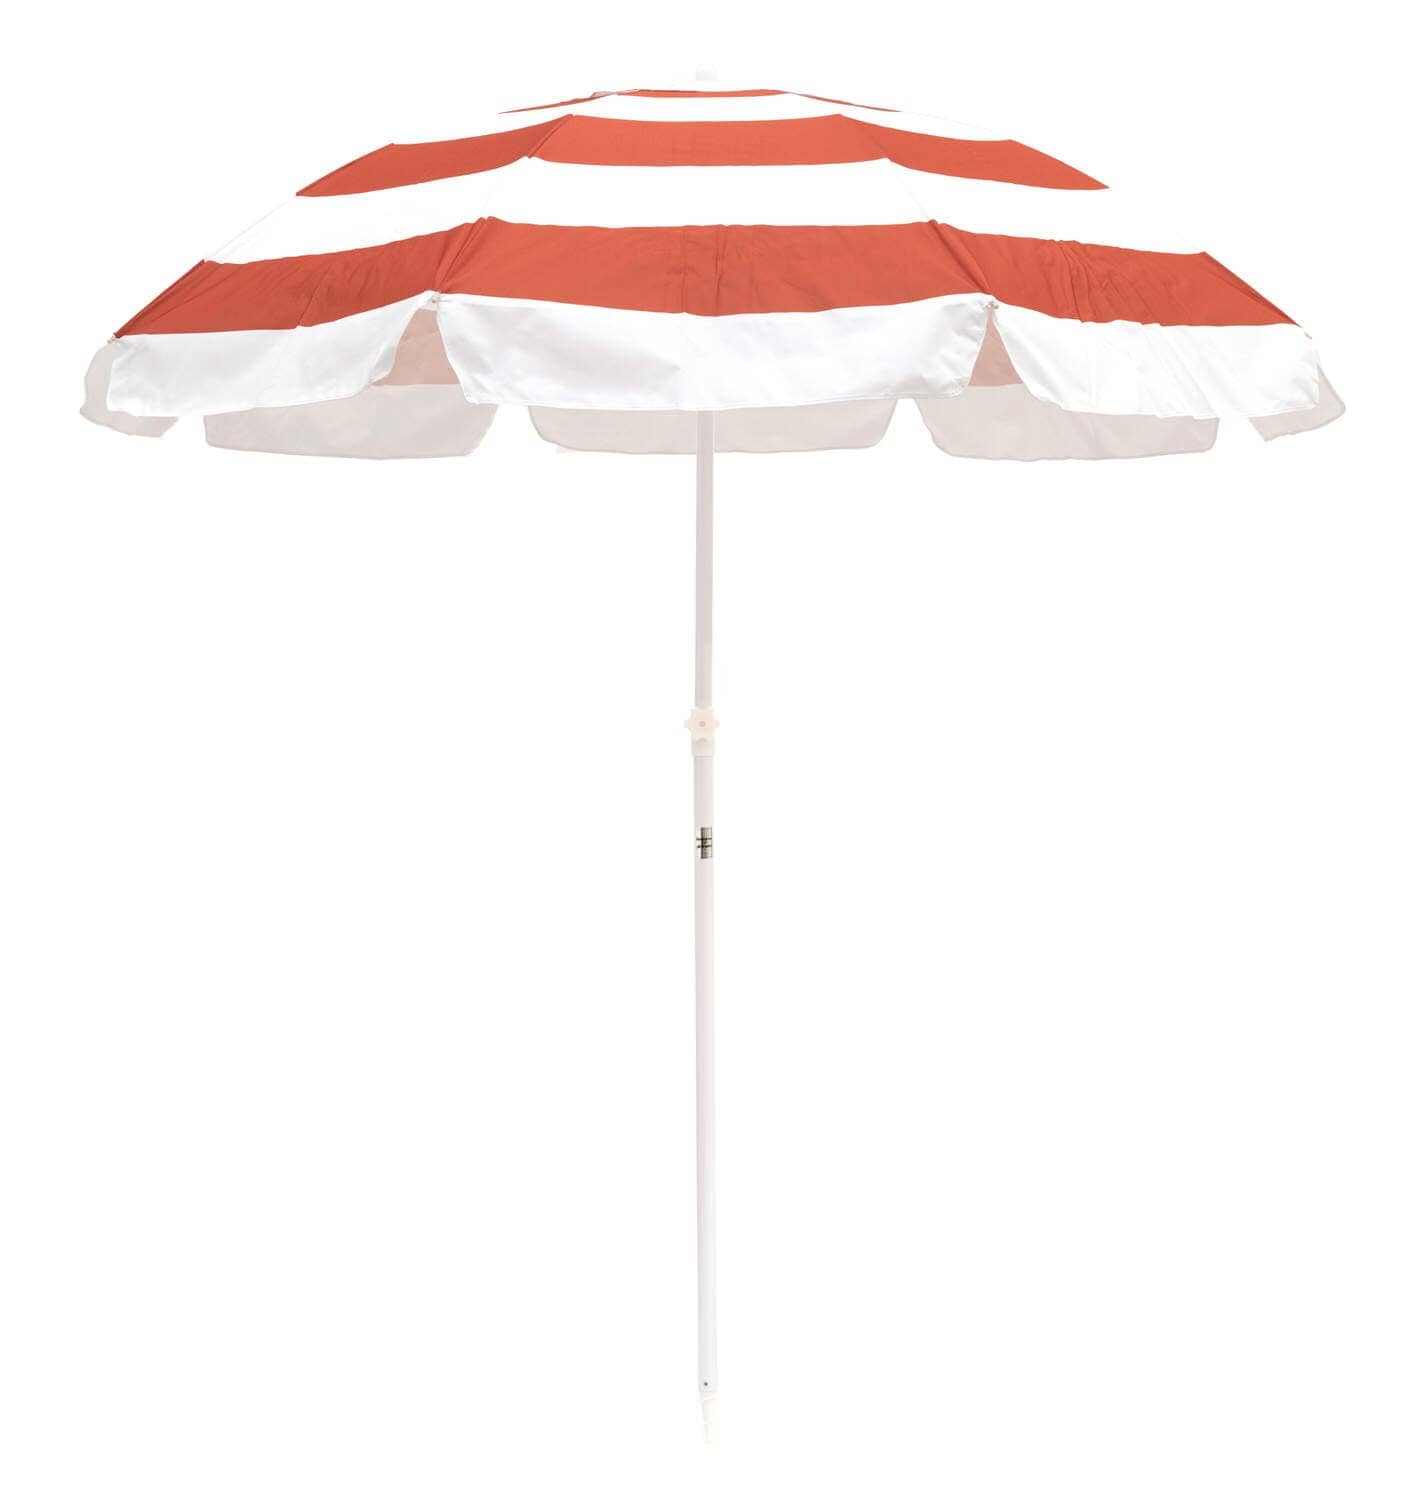 Studio image of Le Sirenuse Family beach umbrella